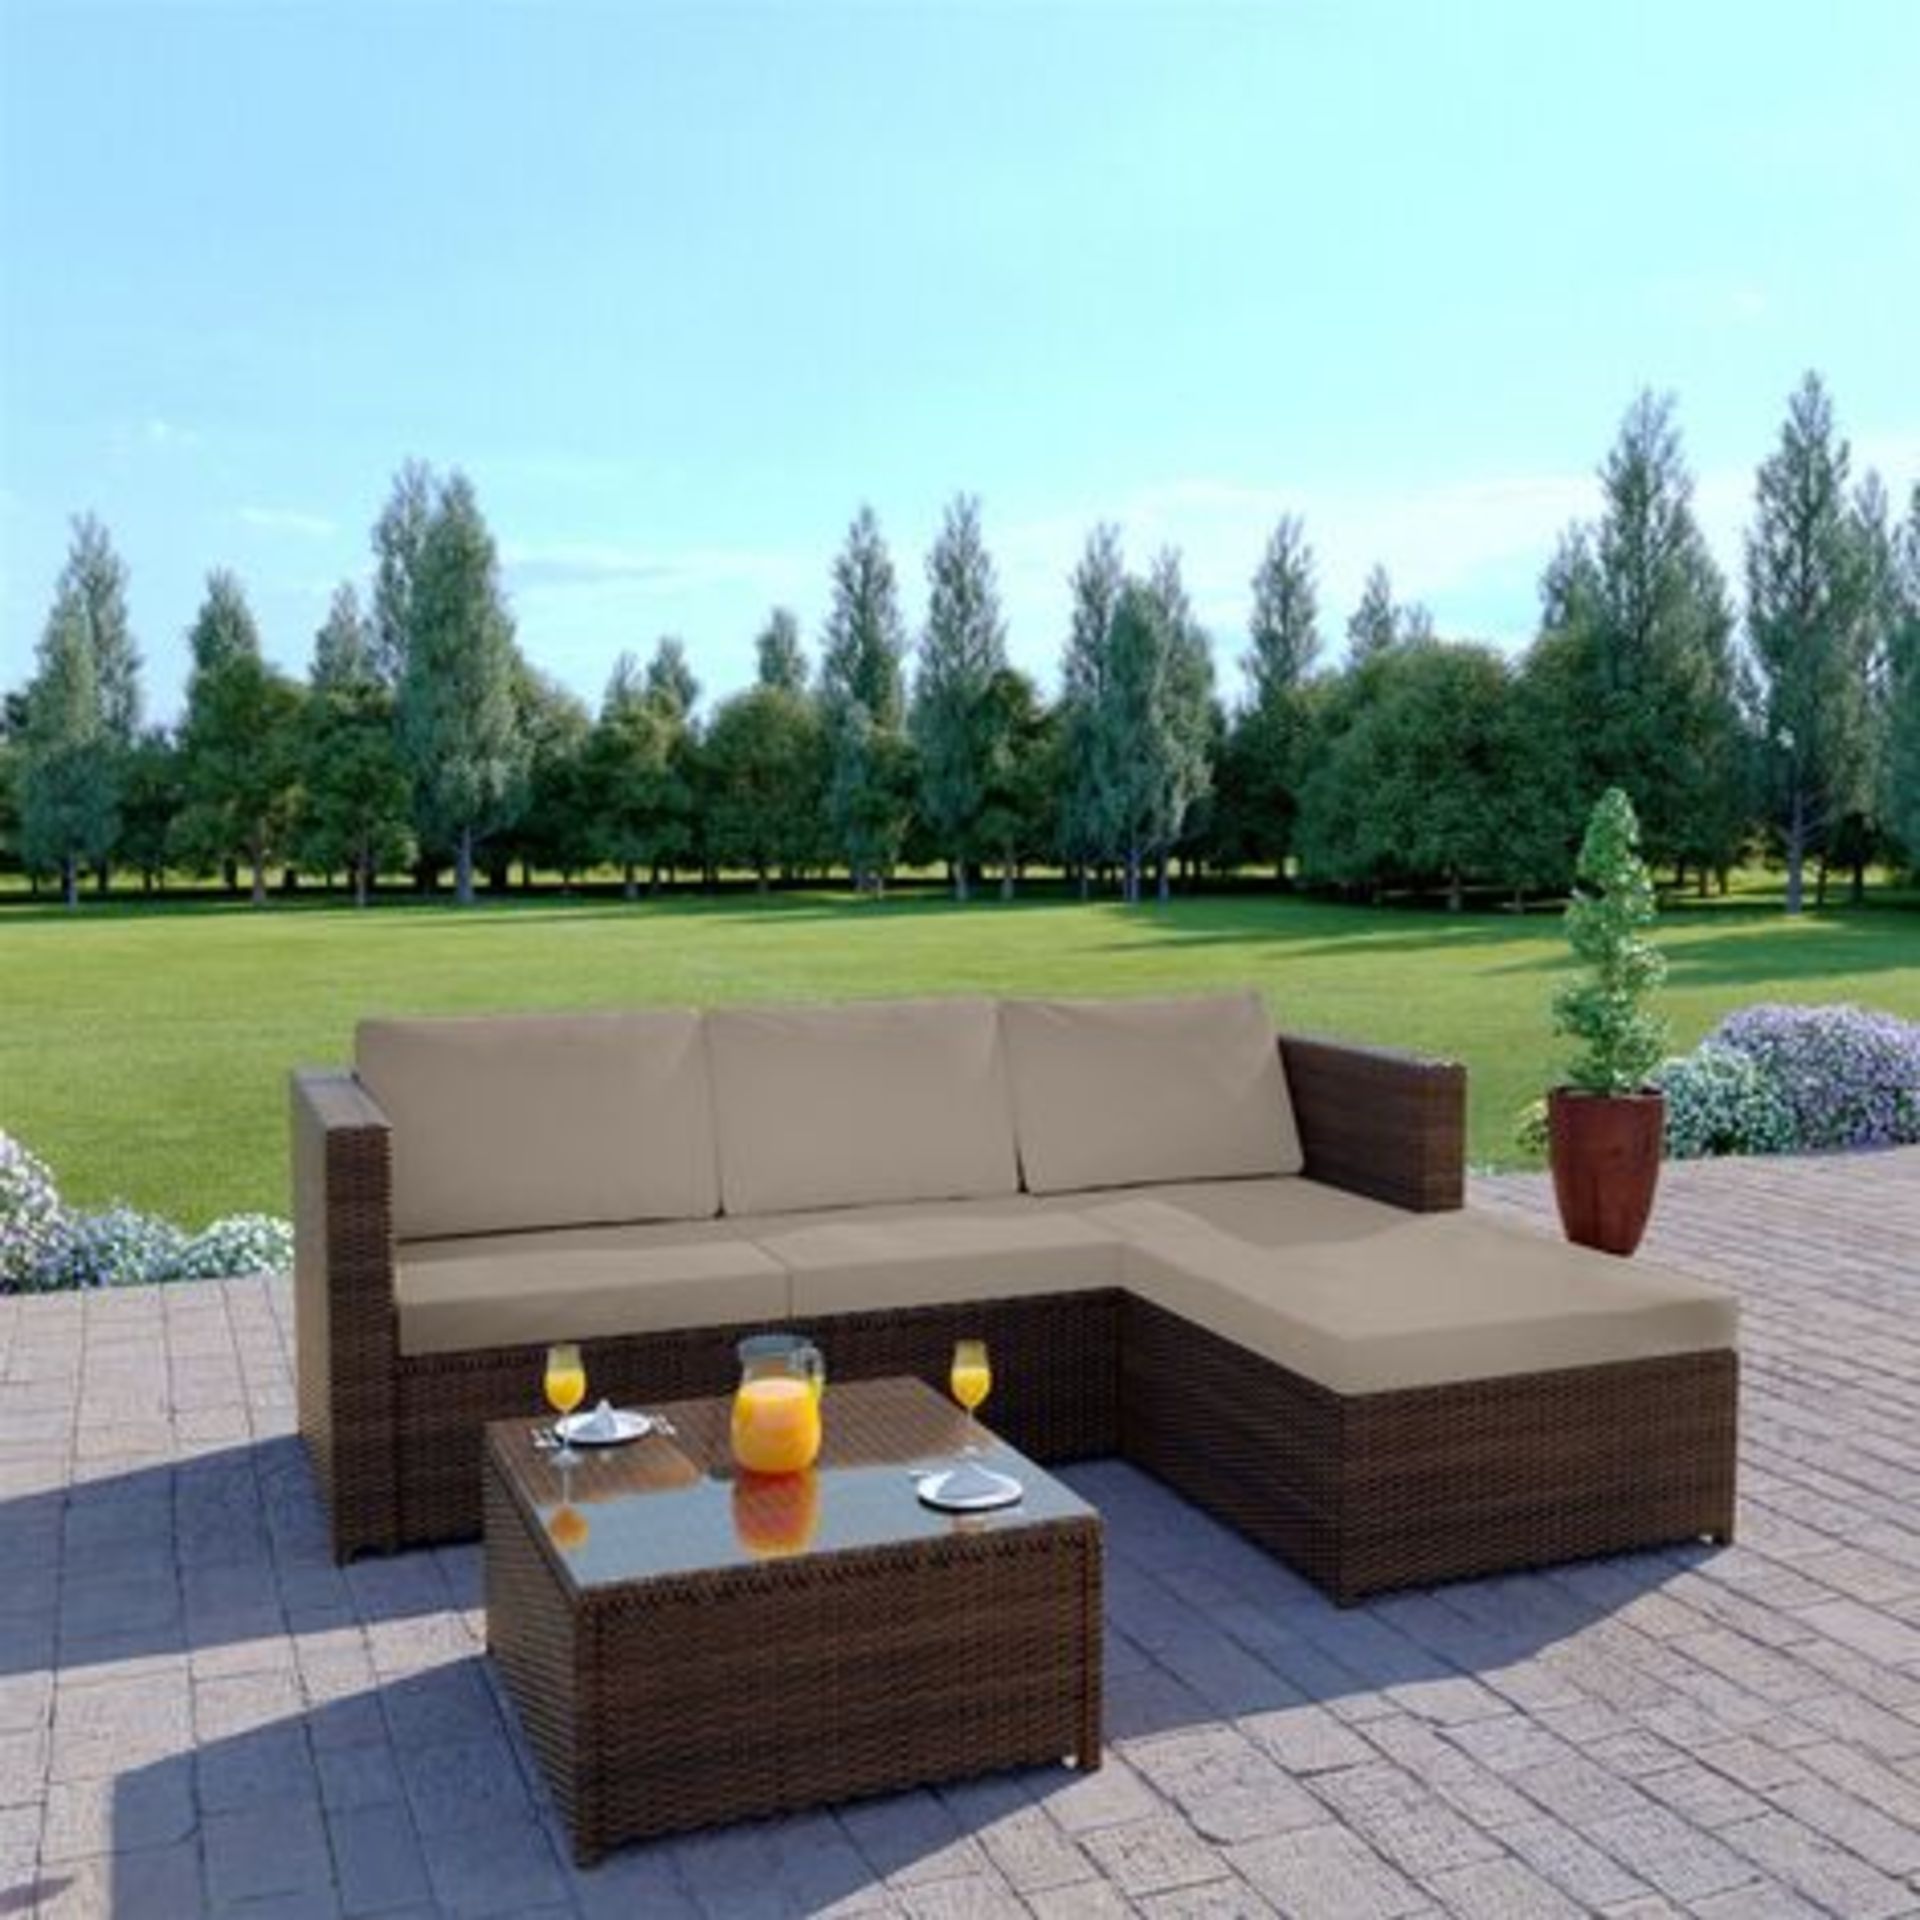 Brand New Rattan Garden Corner Sofa And Drinks Table Patio Furniture Set (Mixed Grey + coffee